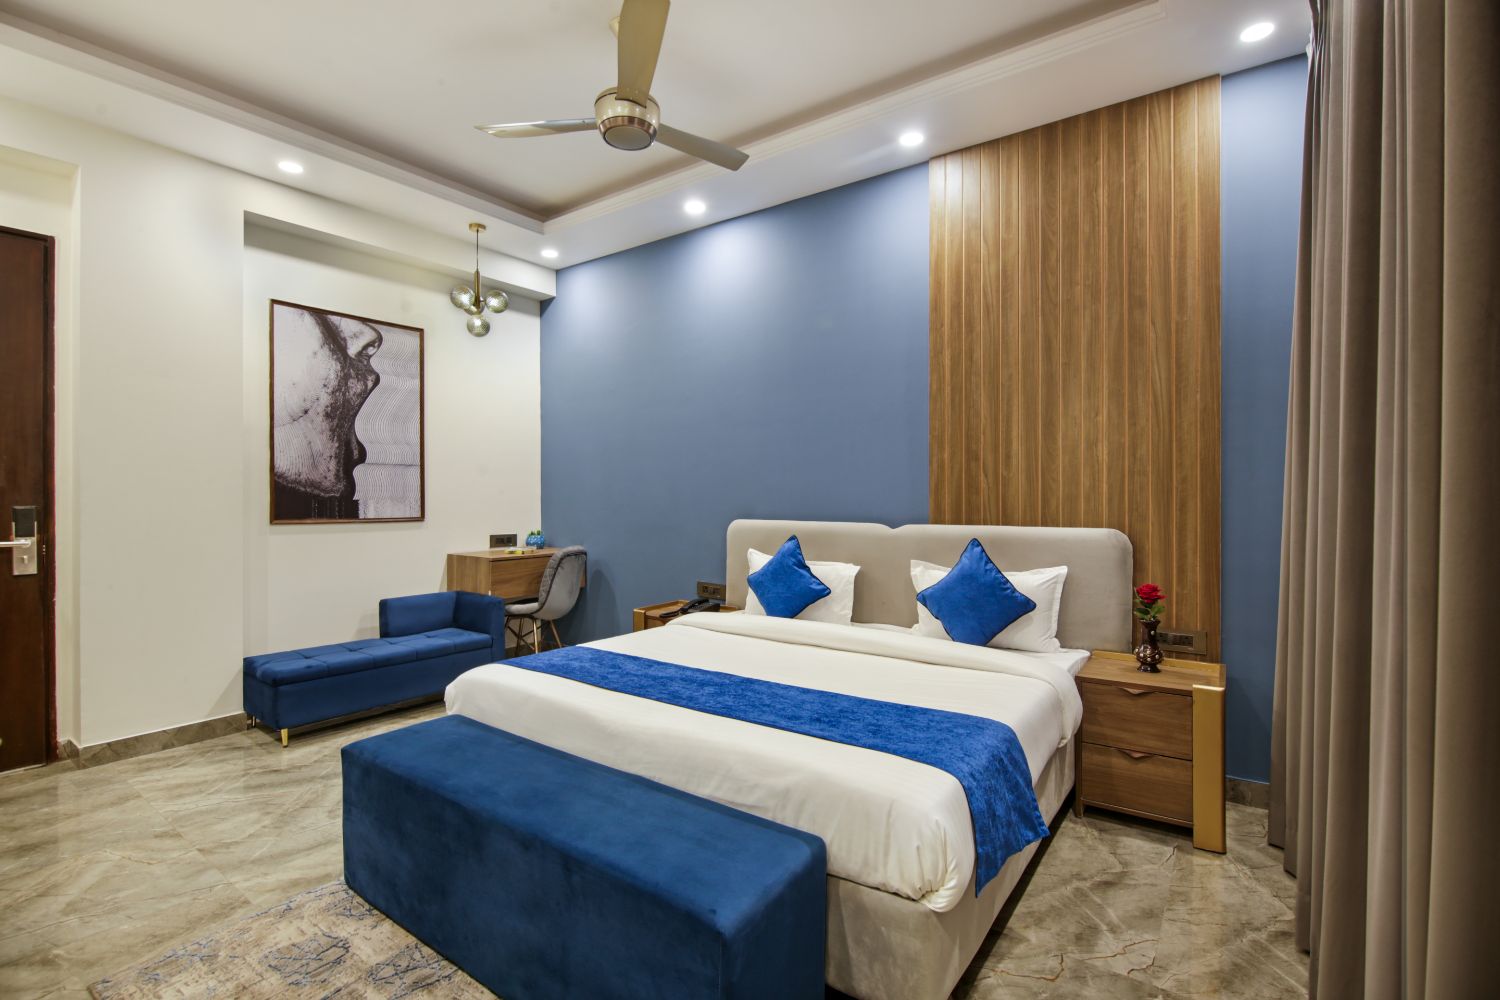 Presedential Suit Rooms Sector 143, Noida